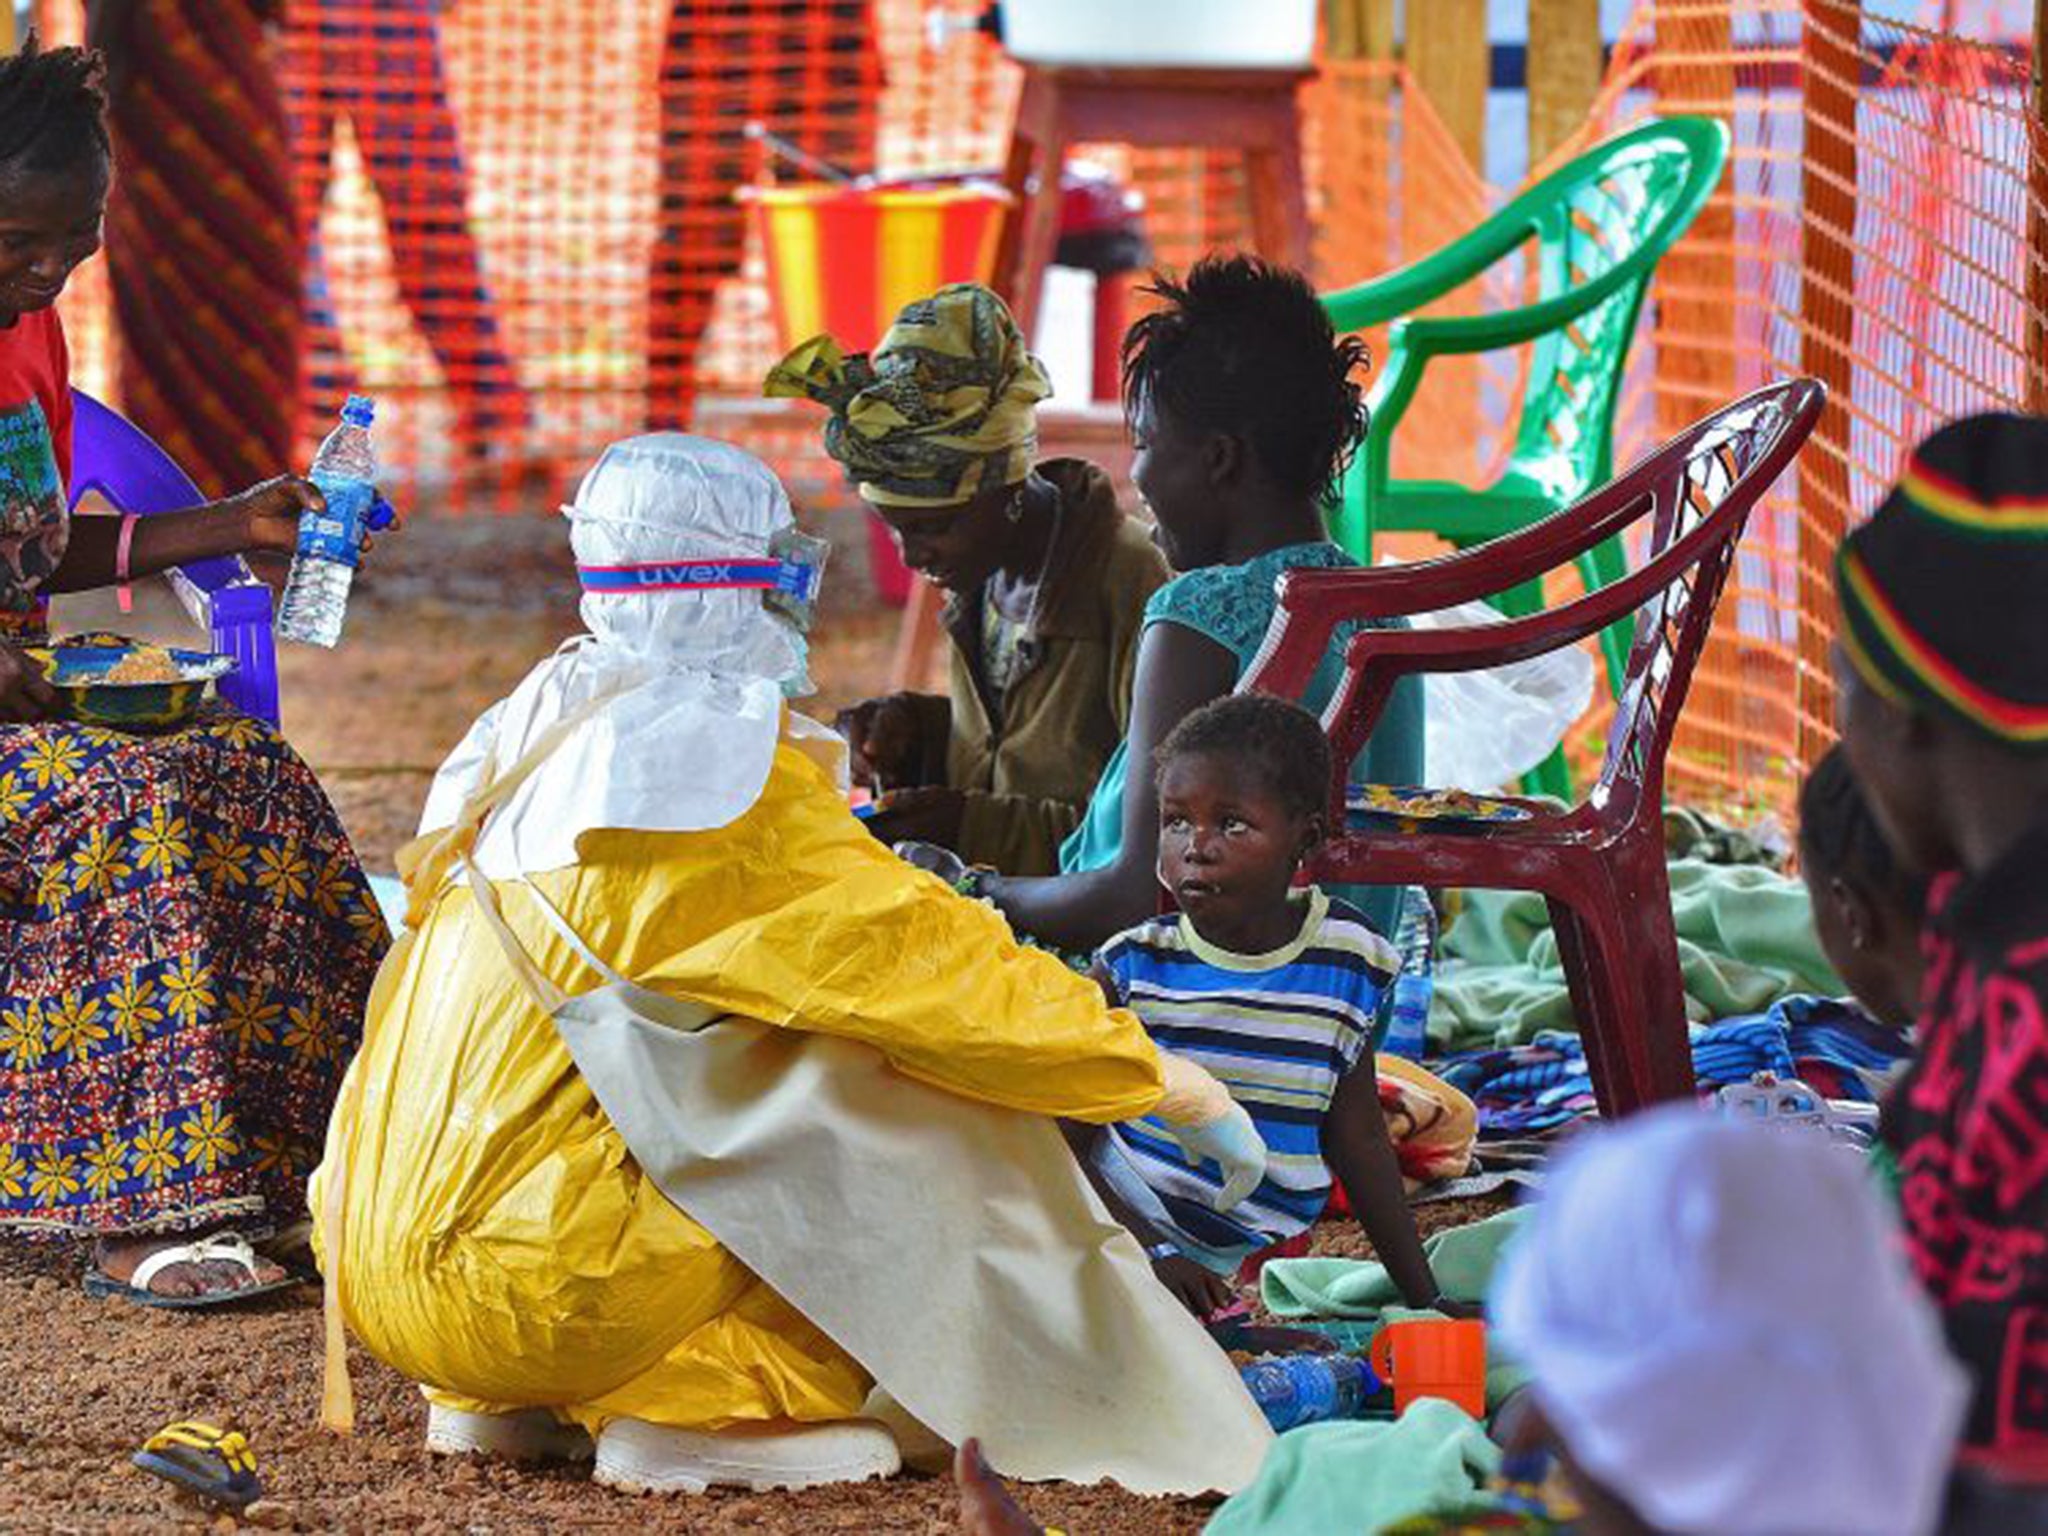 A medic feeds a child victim of Ebola in Sierra Leone (AFP/Getty)